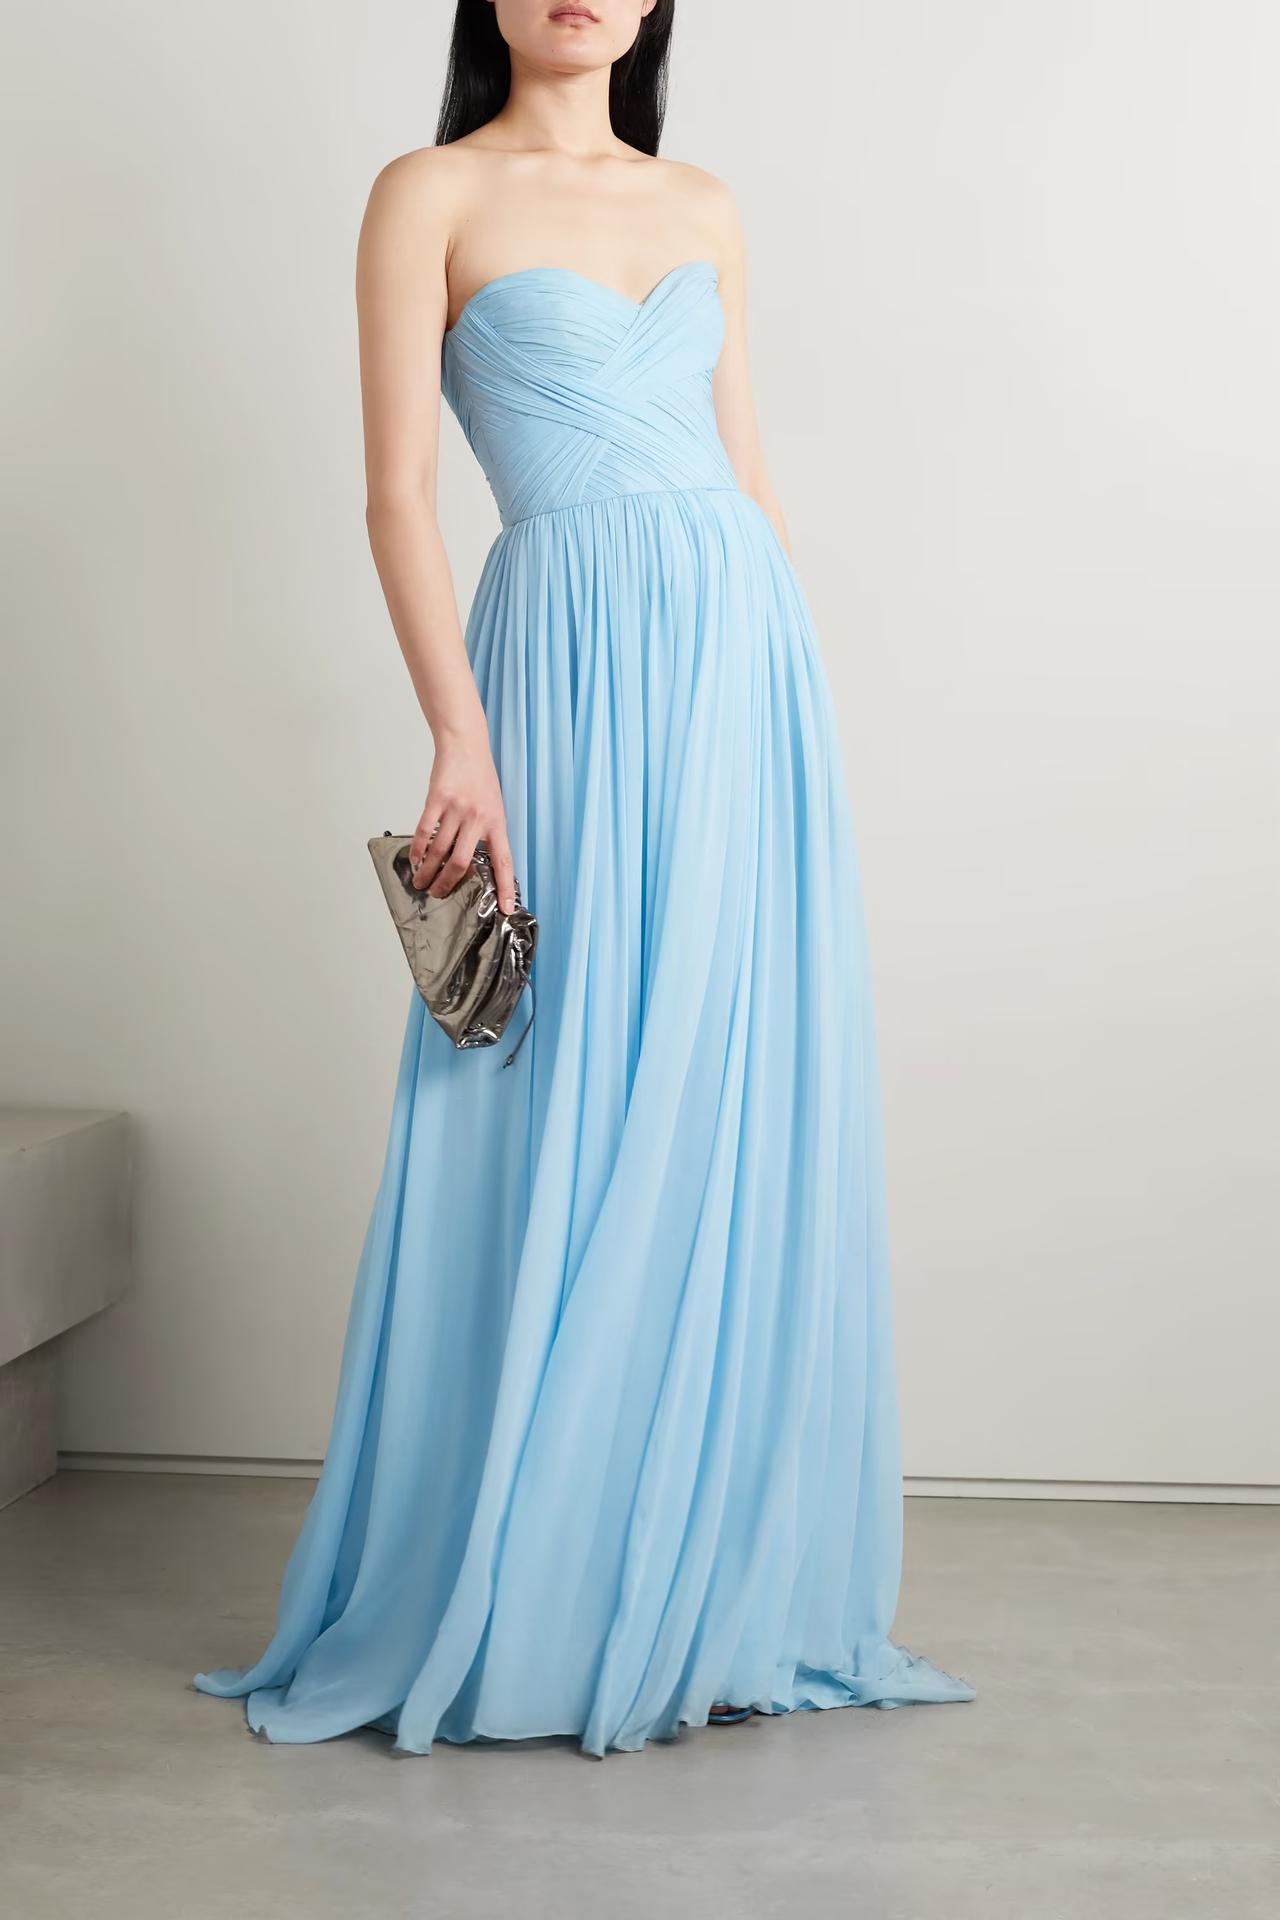 Blue Wedding Dress for sale | eBay-tmf.edu.vn